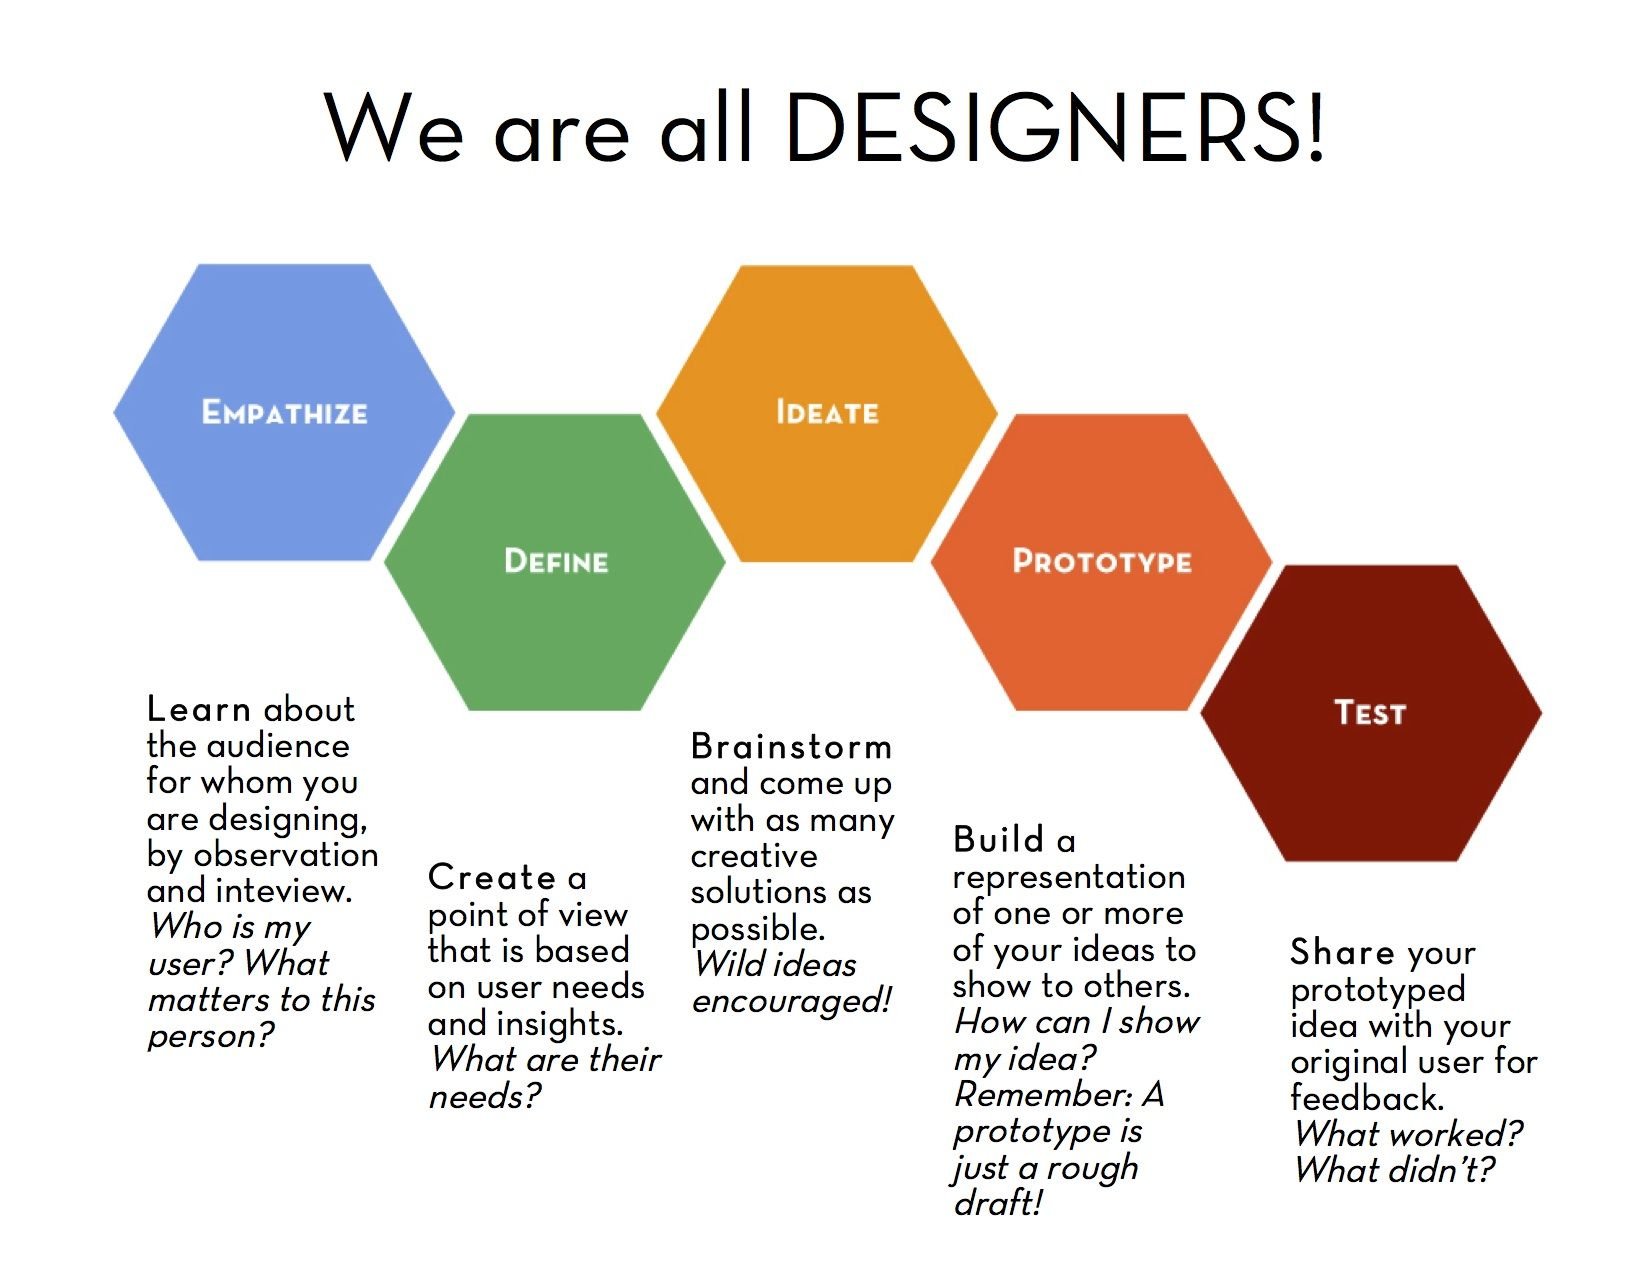 Are products of high. Дизайн мышление. Процесс Design thinking. Прототип дизайн мышление. Дизайн-мышление идеи.